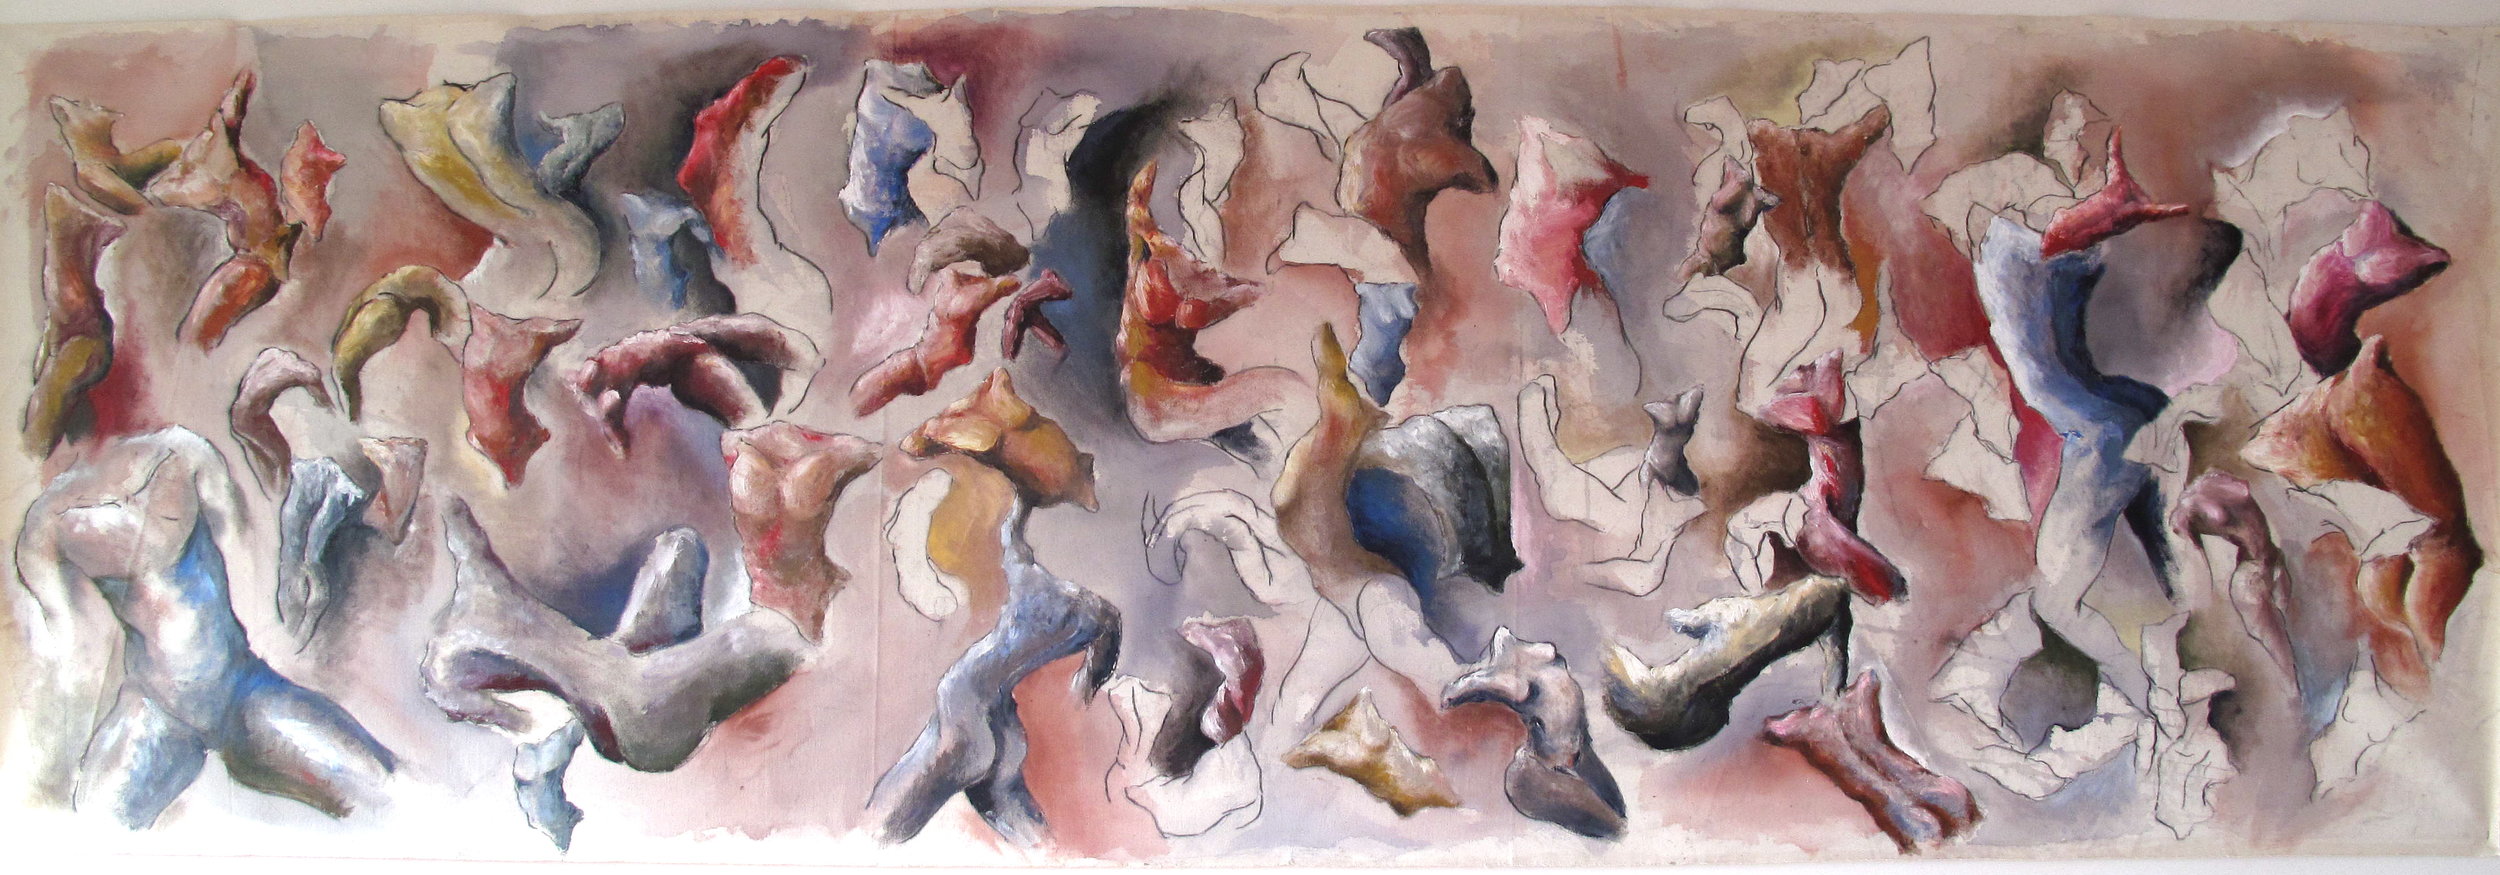   Dance. 4 x 1.5m, Oil on Canvas. 2015  